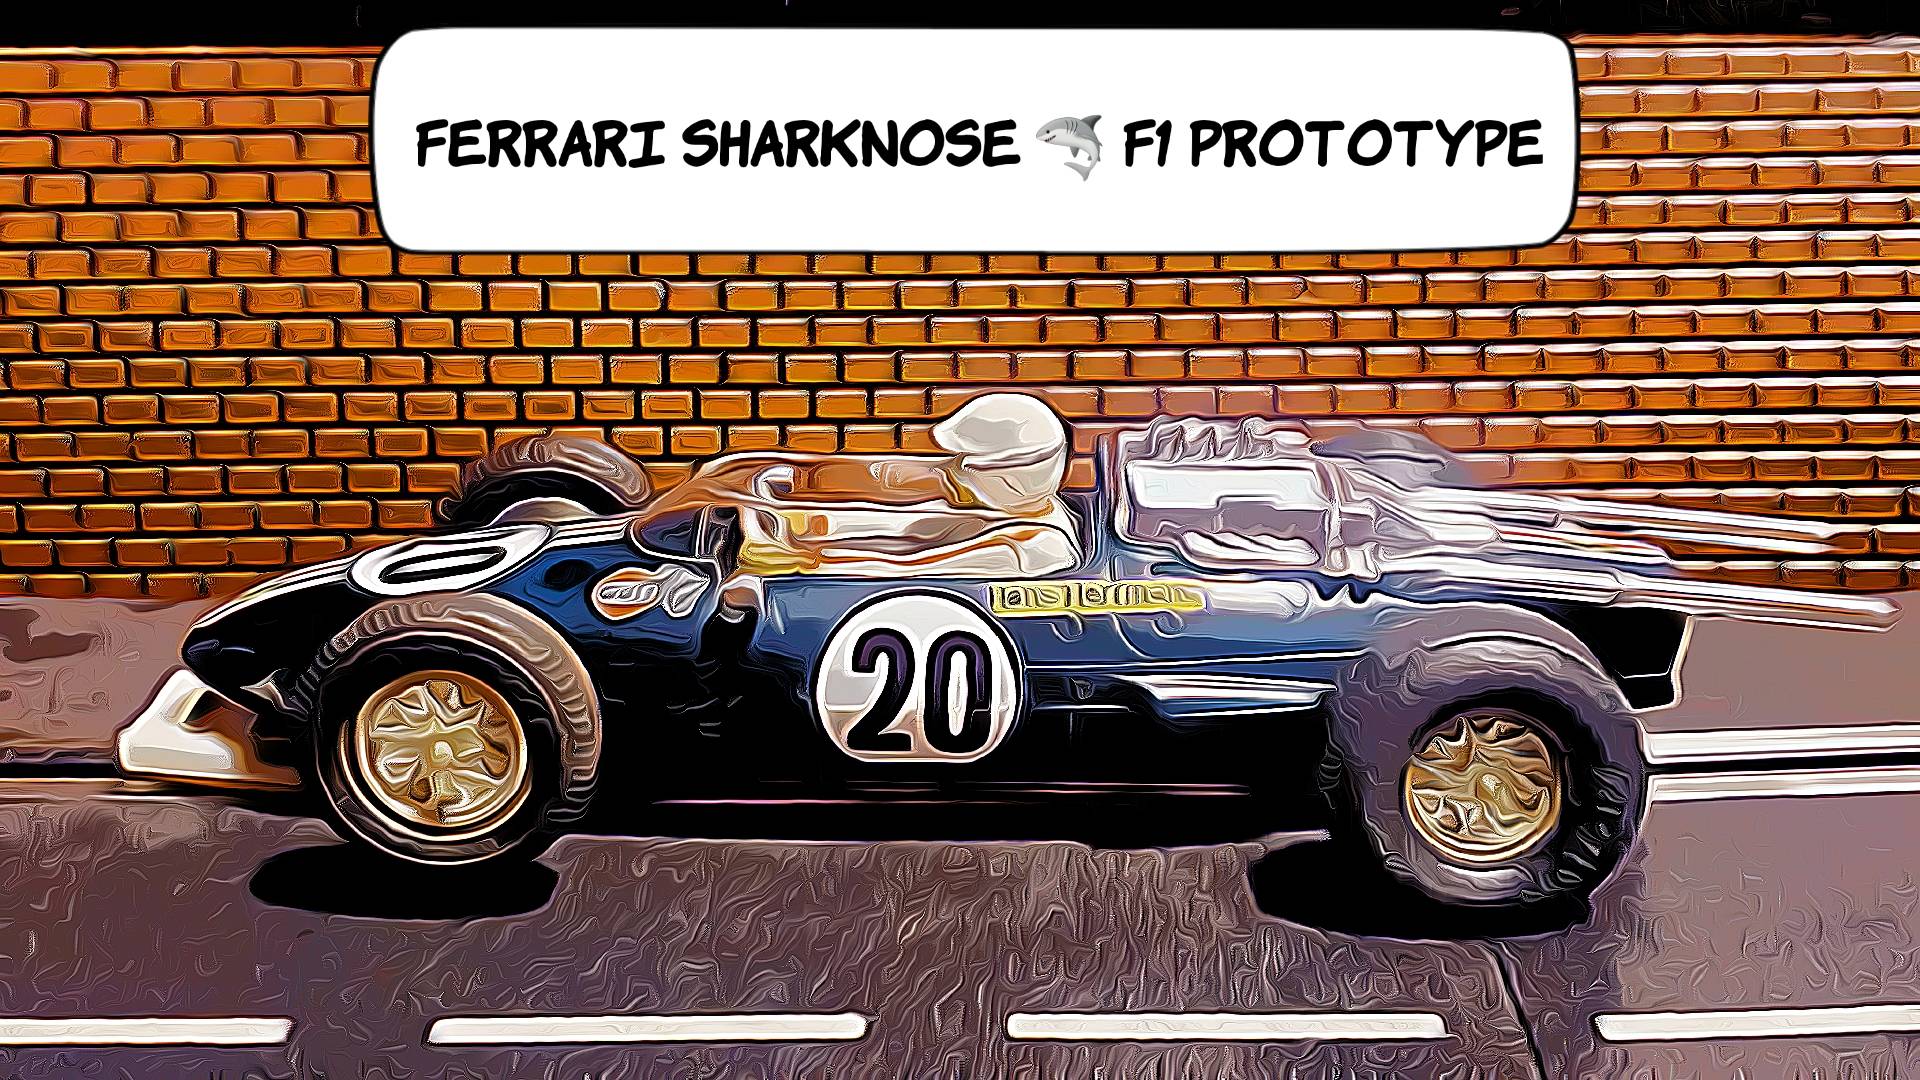 * Sale * Russkit Ferrari Sharknose Prototype Formula One 1:24 Scale Slot Car Racer - Car 20